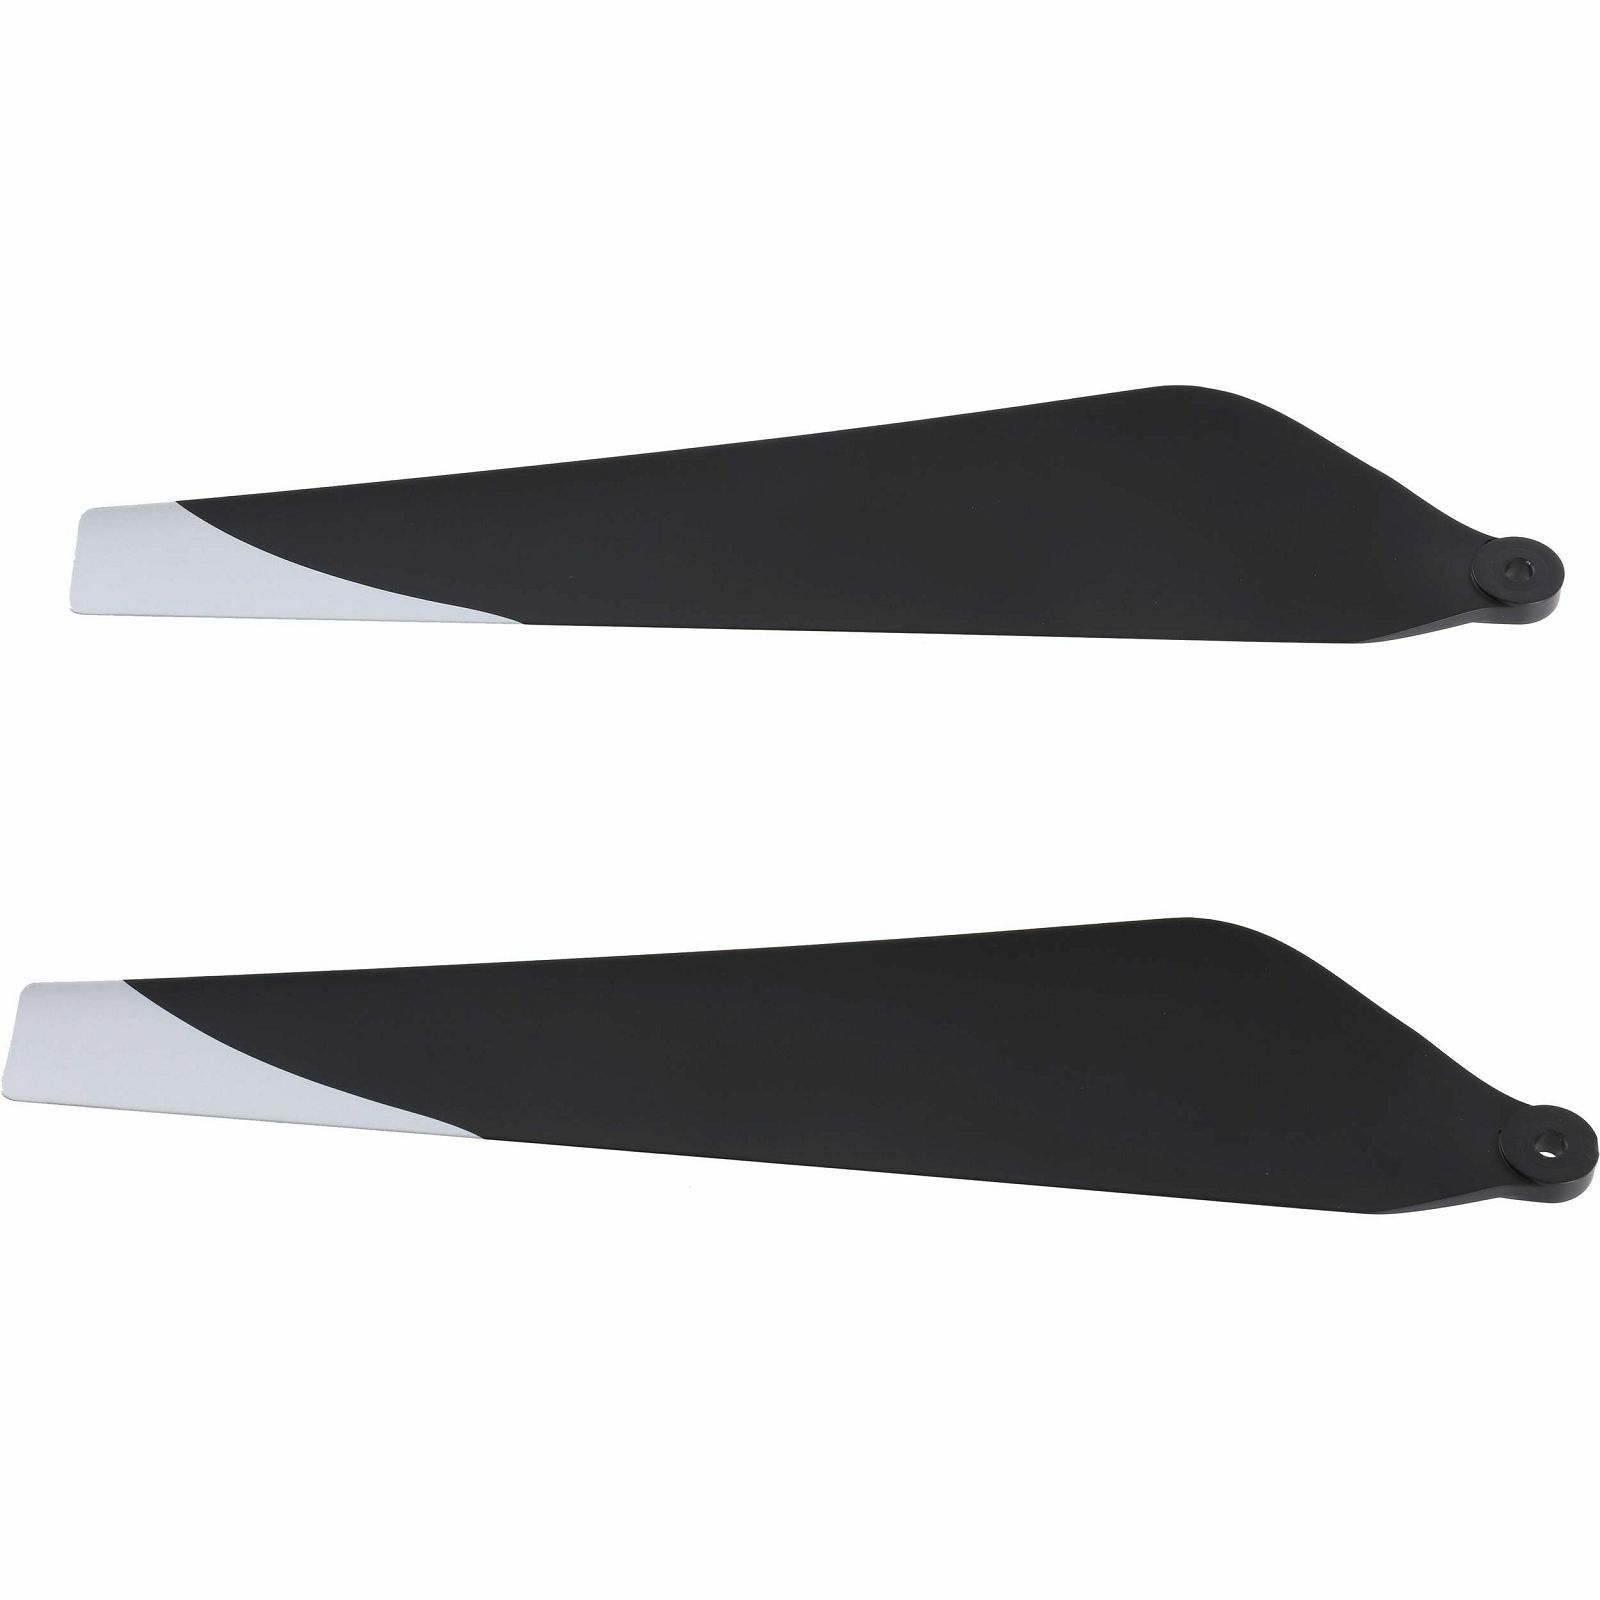 DJI 2880 Carbon Fiber Reinforced Folding Propeller (CW blades)